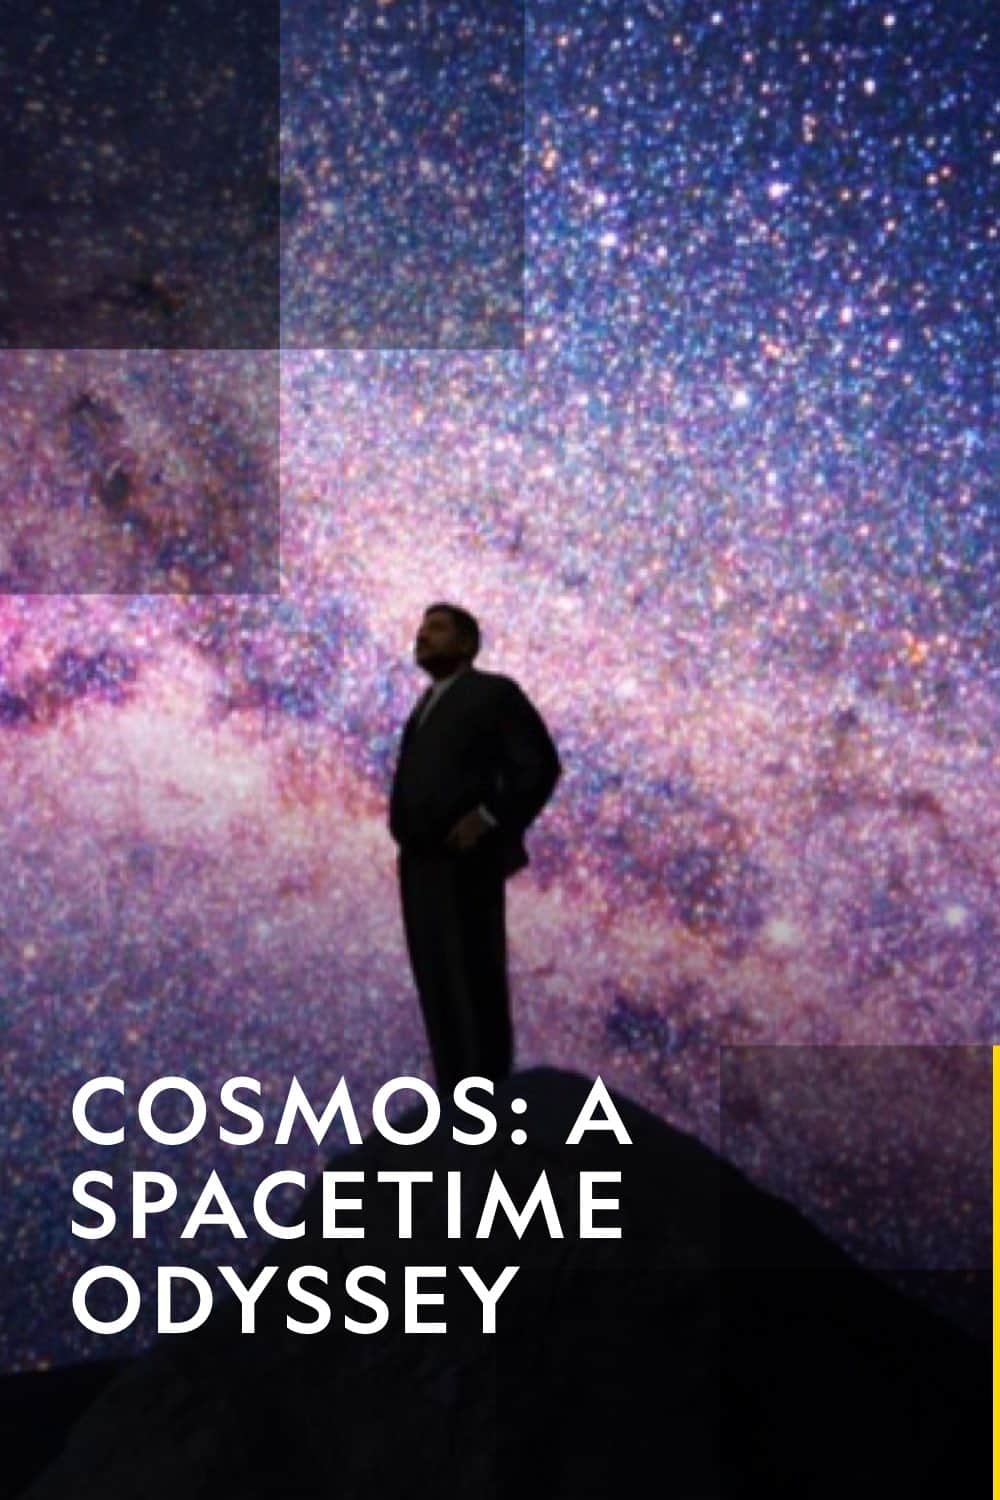 cosmos a spacetime odyssey movie